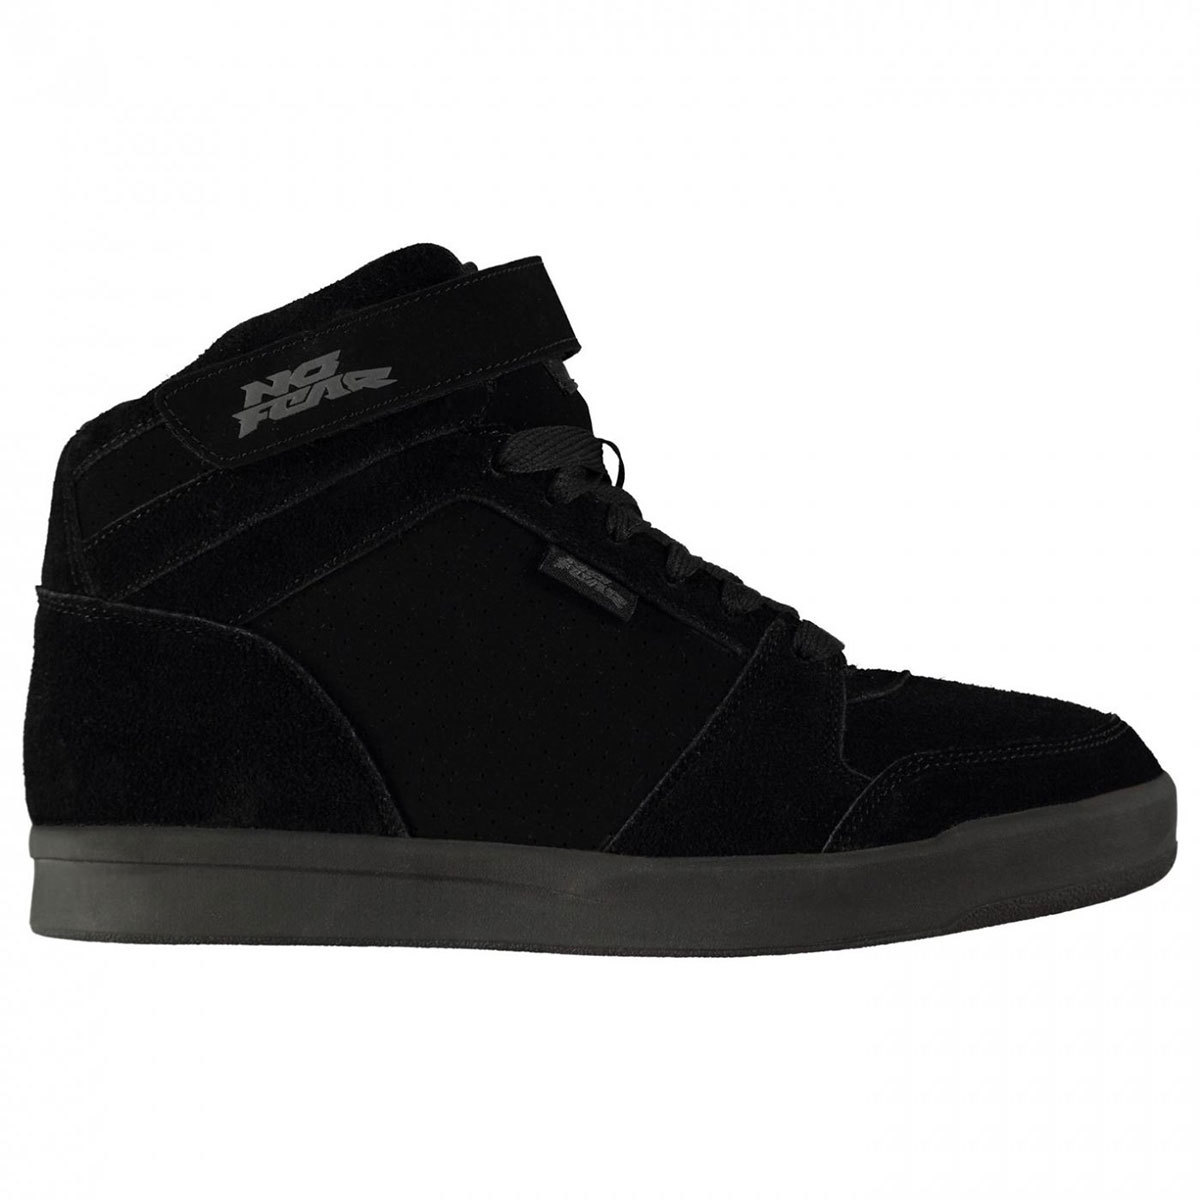 No Fear Men's Elevate 2 Skate Shoes - Black, 9.5